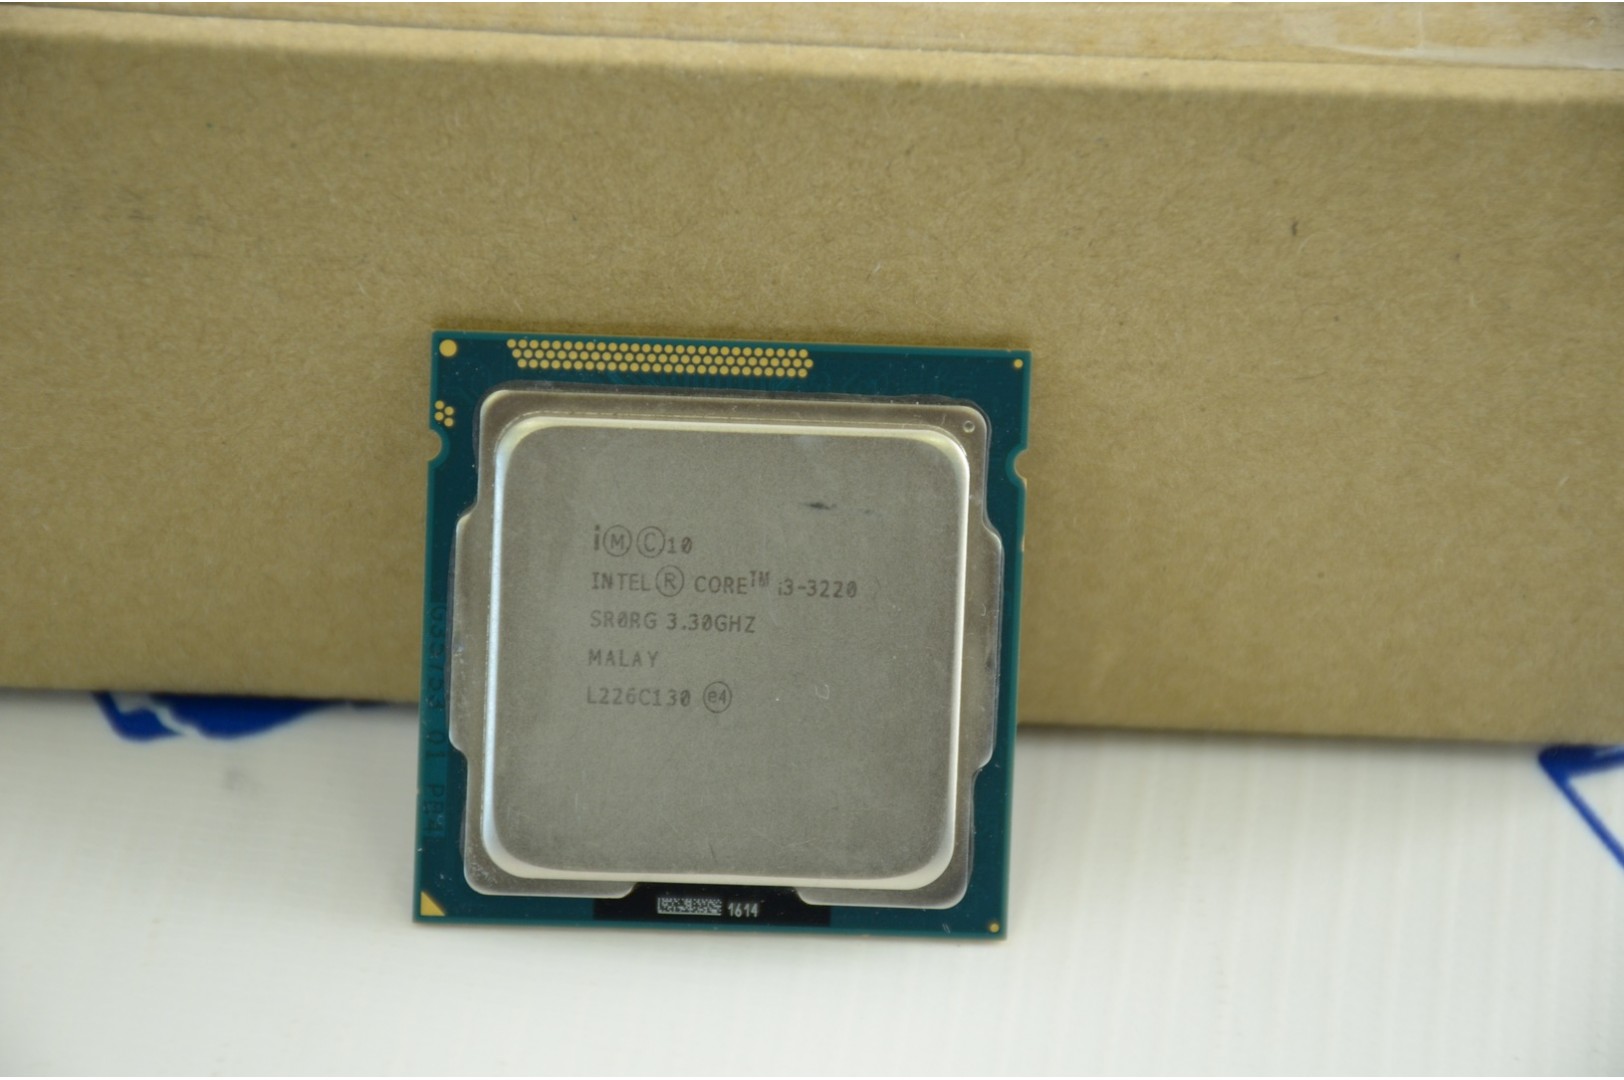 Intel i3 3.3 ghz. Intel® Core™ i3-3220. Intel® Core™ i3-3220 3.30GHZ. Процессор Intel Core i3-3220. Intel Core i3-3220 CPU.